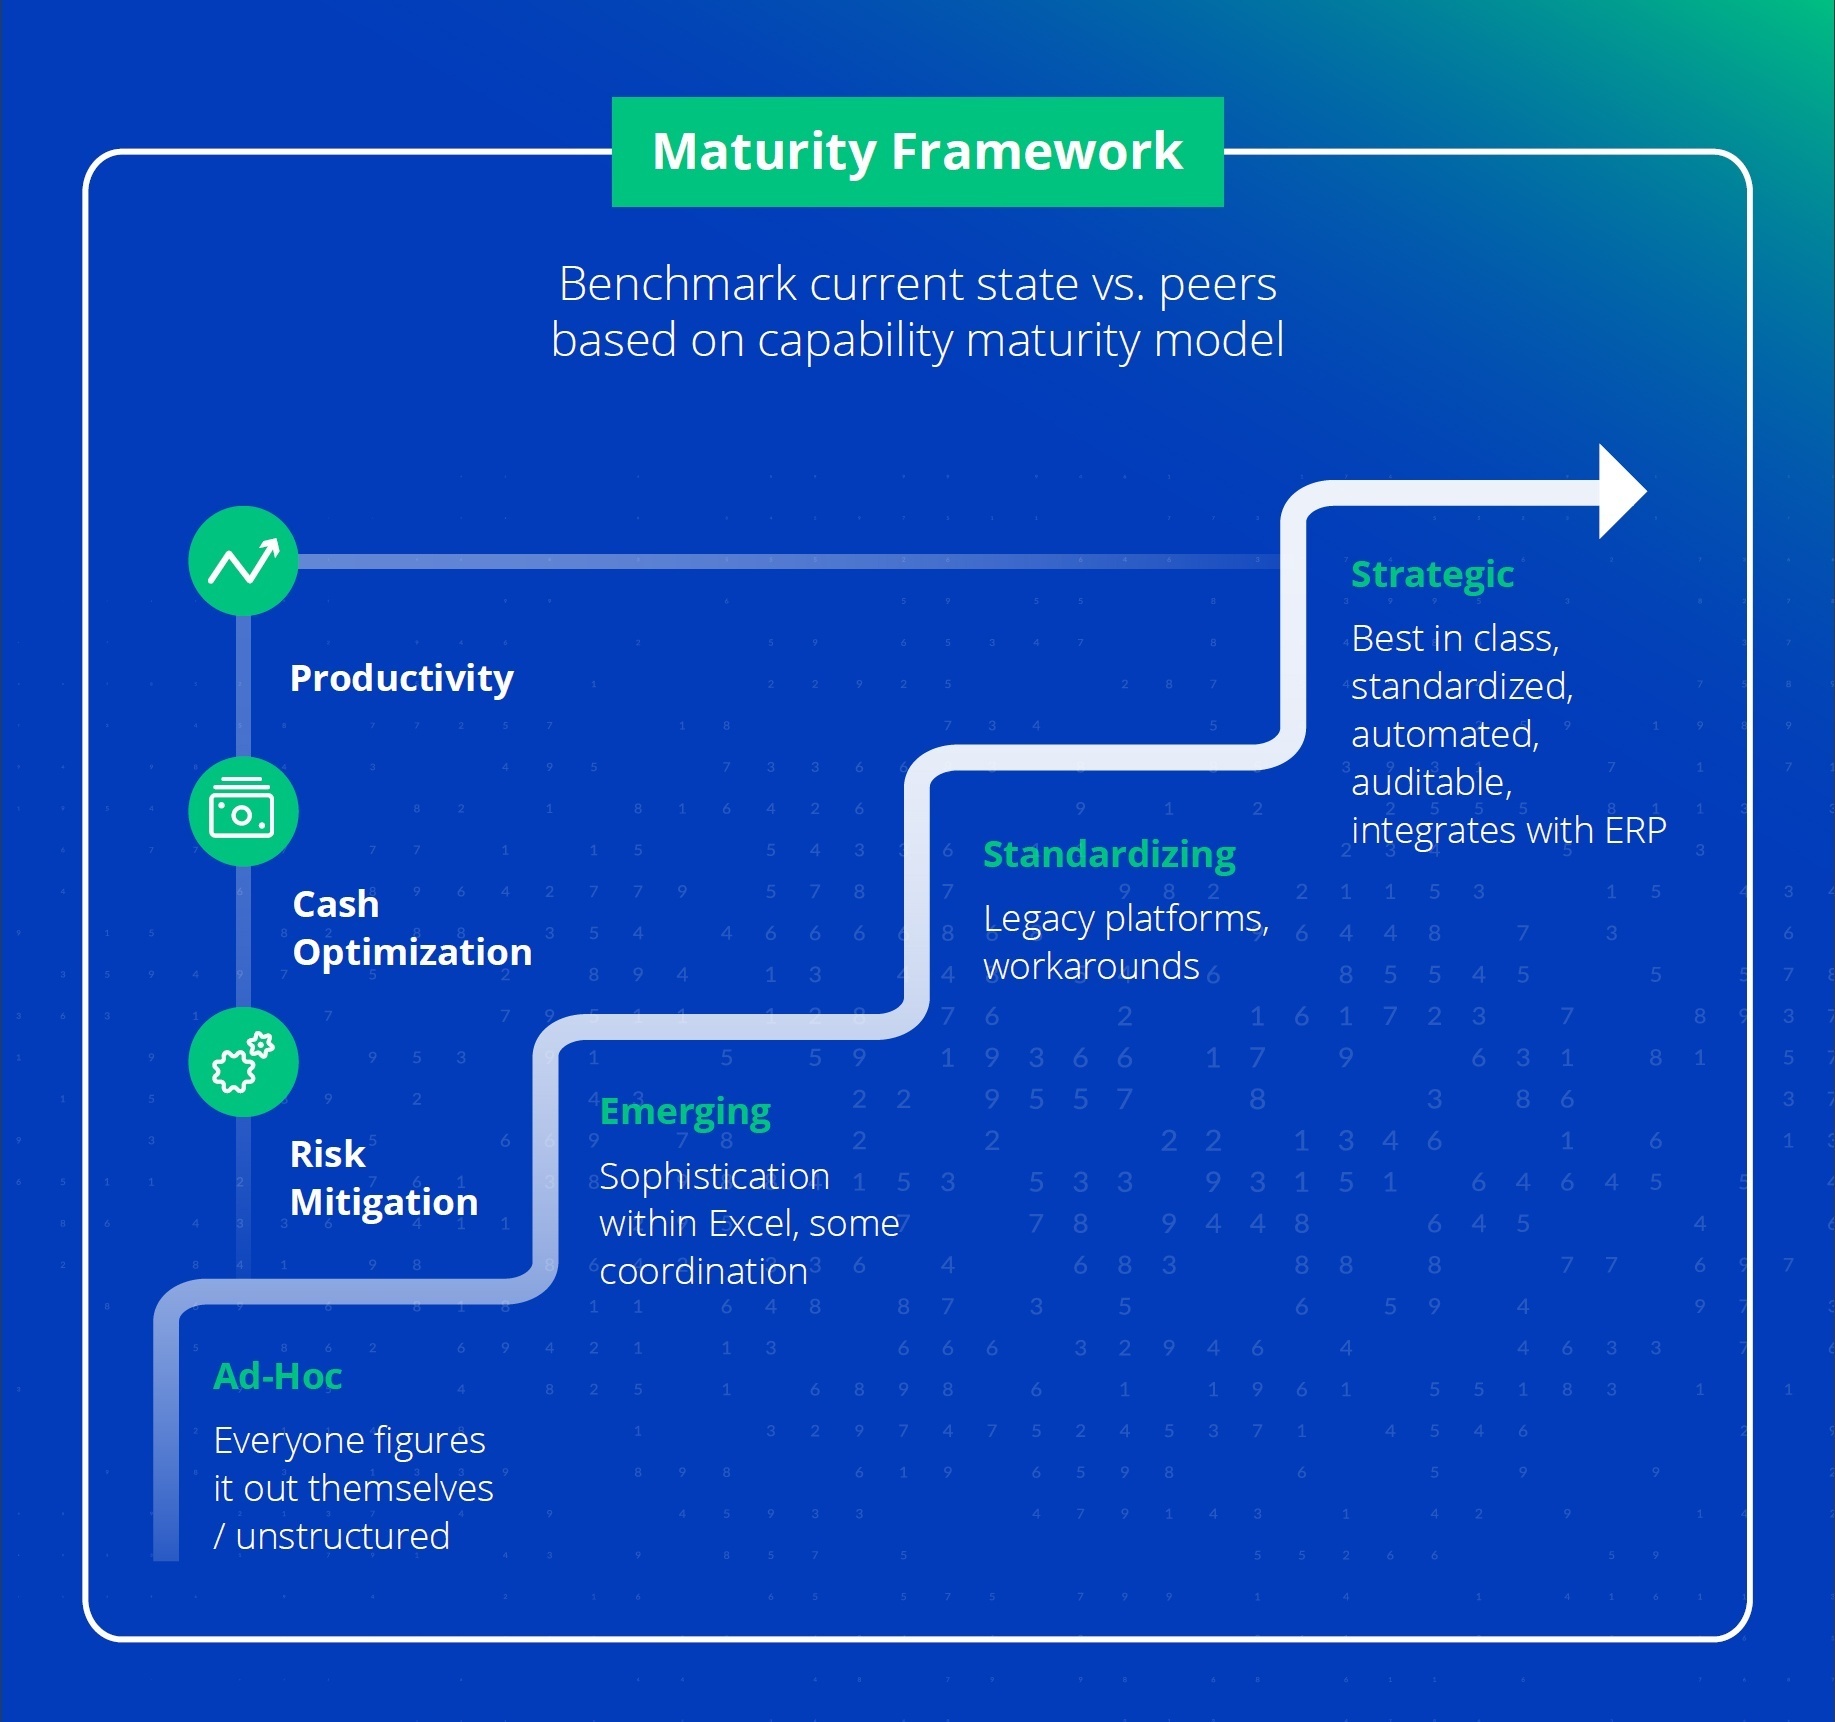 Kyriba Value Engineering's Maturity Framework for Cloud Treasury